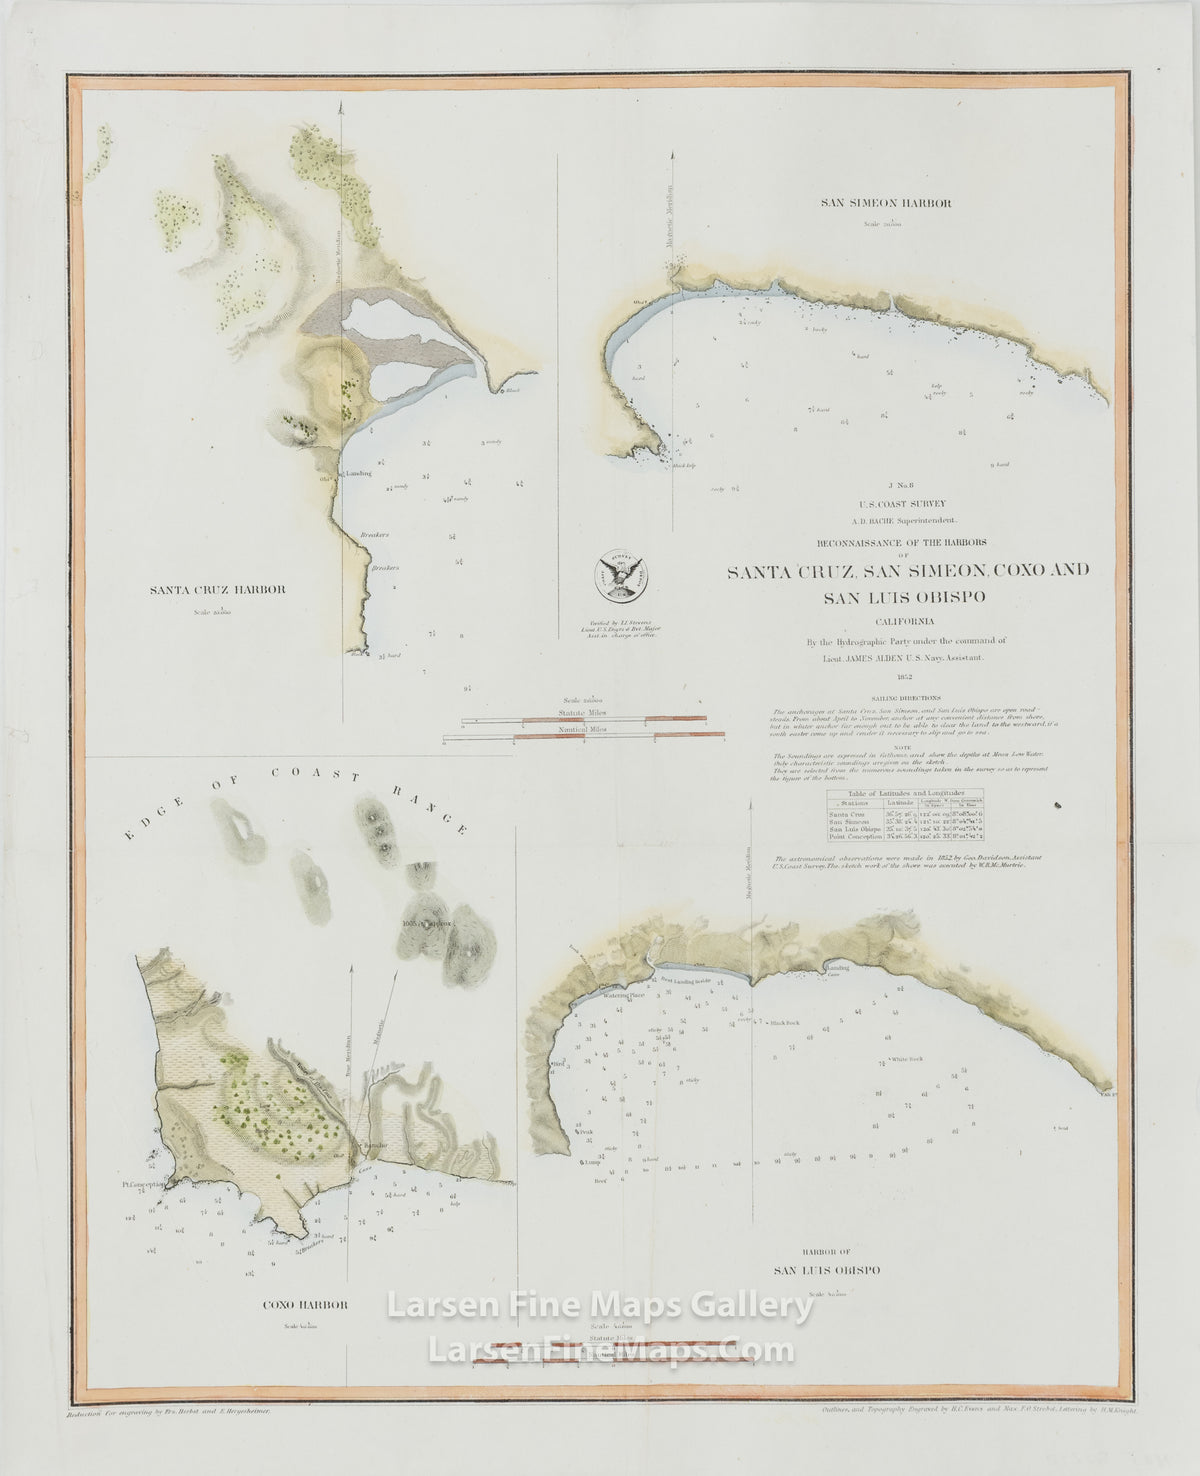 Reconnaissance of Harbors of Santa Cruz, San Simeon, Coxo, and San Luis Obispo.